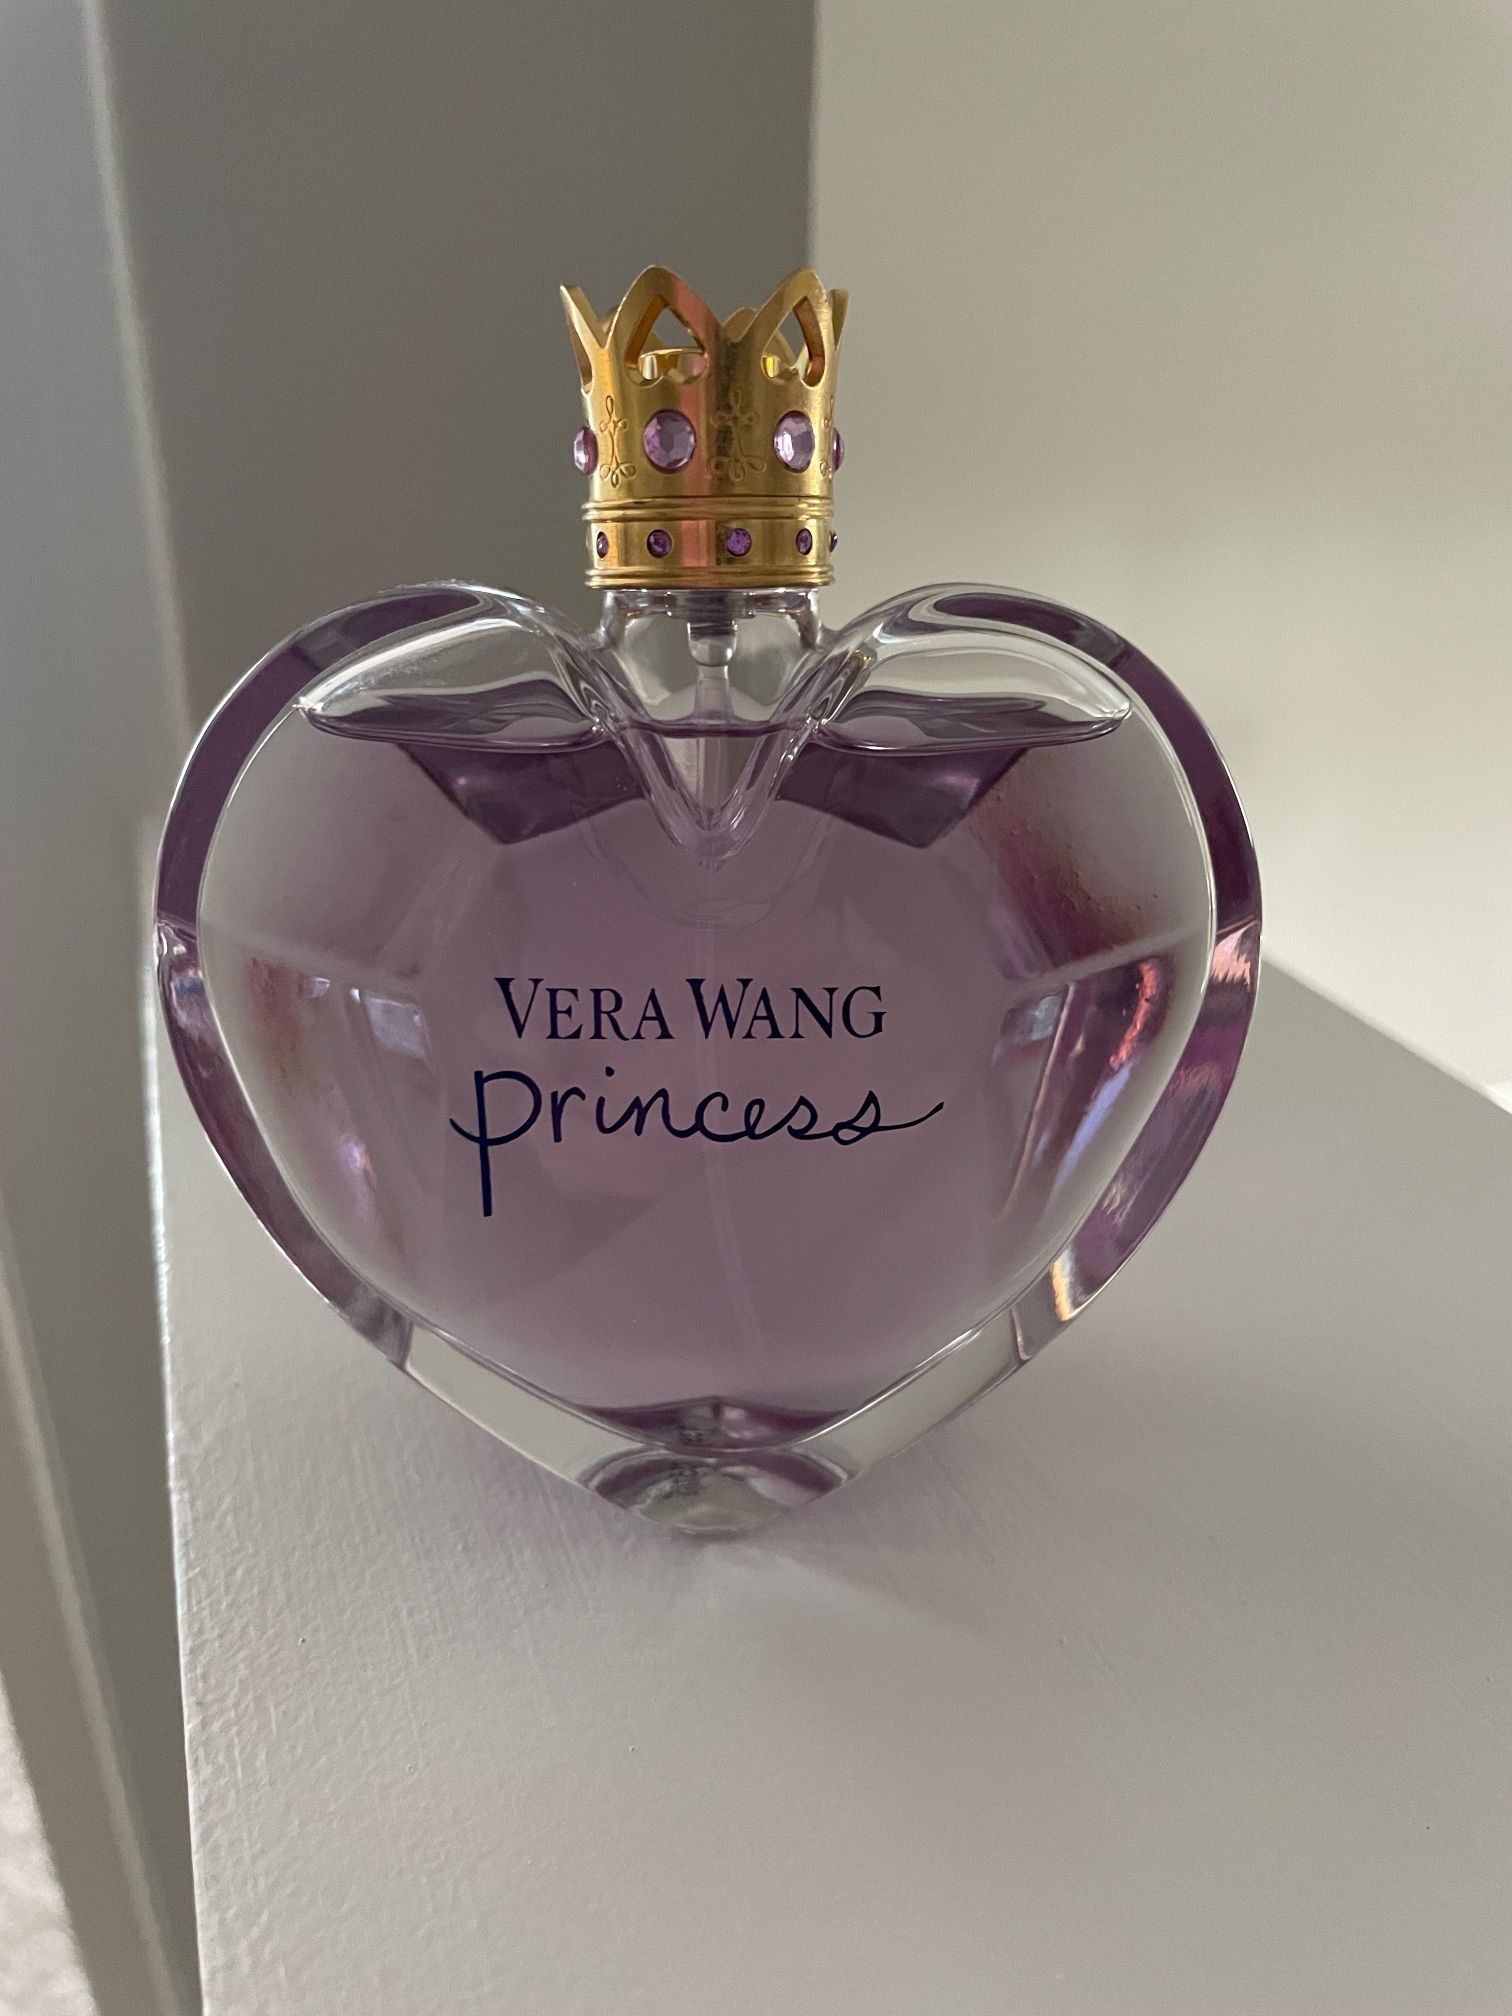 Vera Wang Princess Perfume